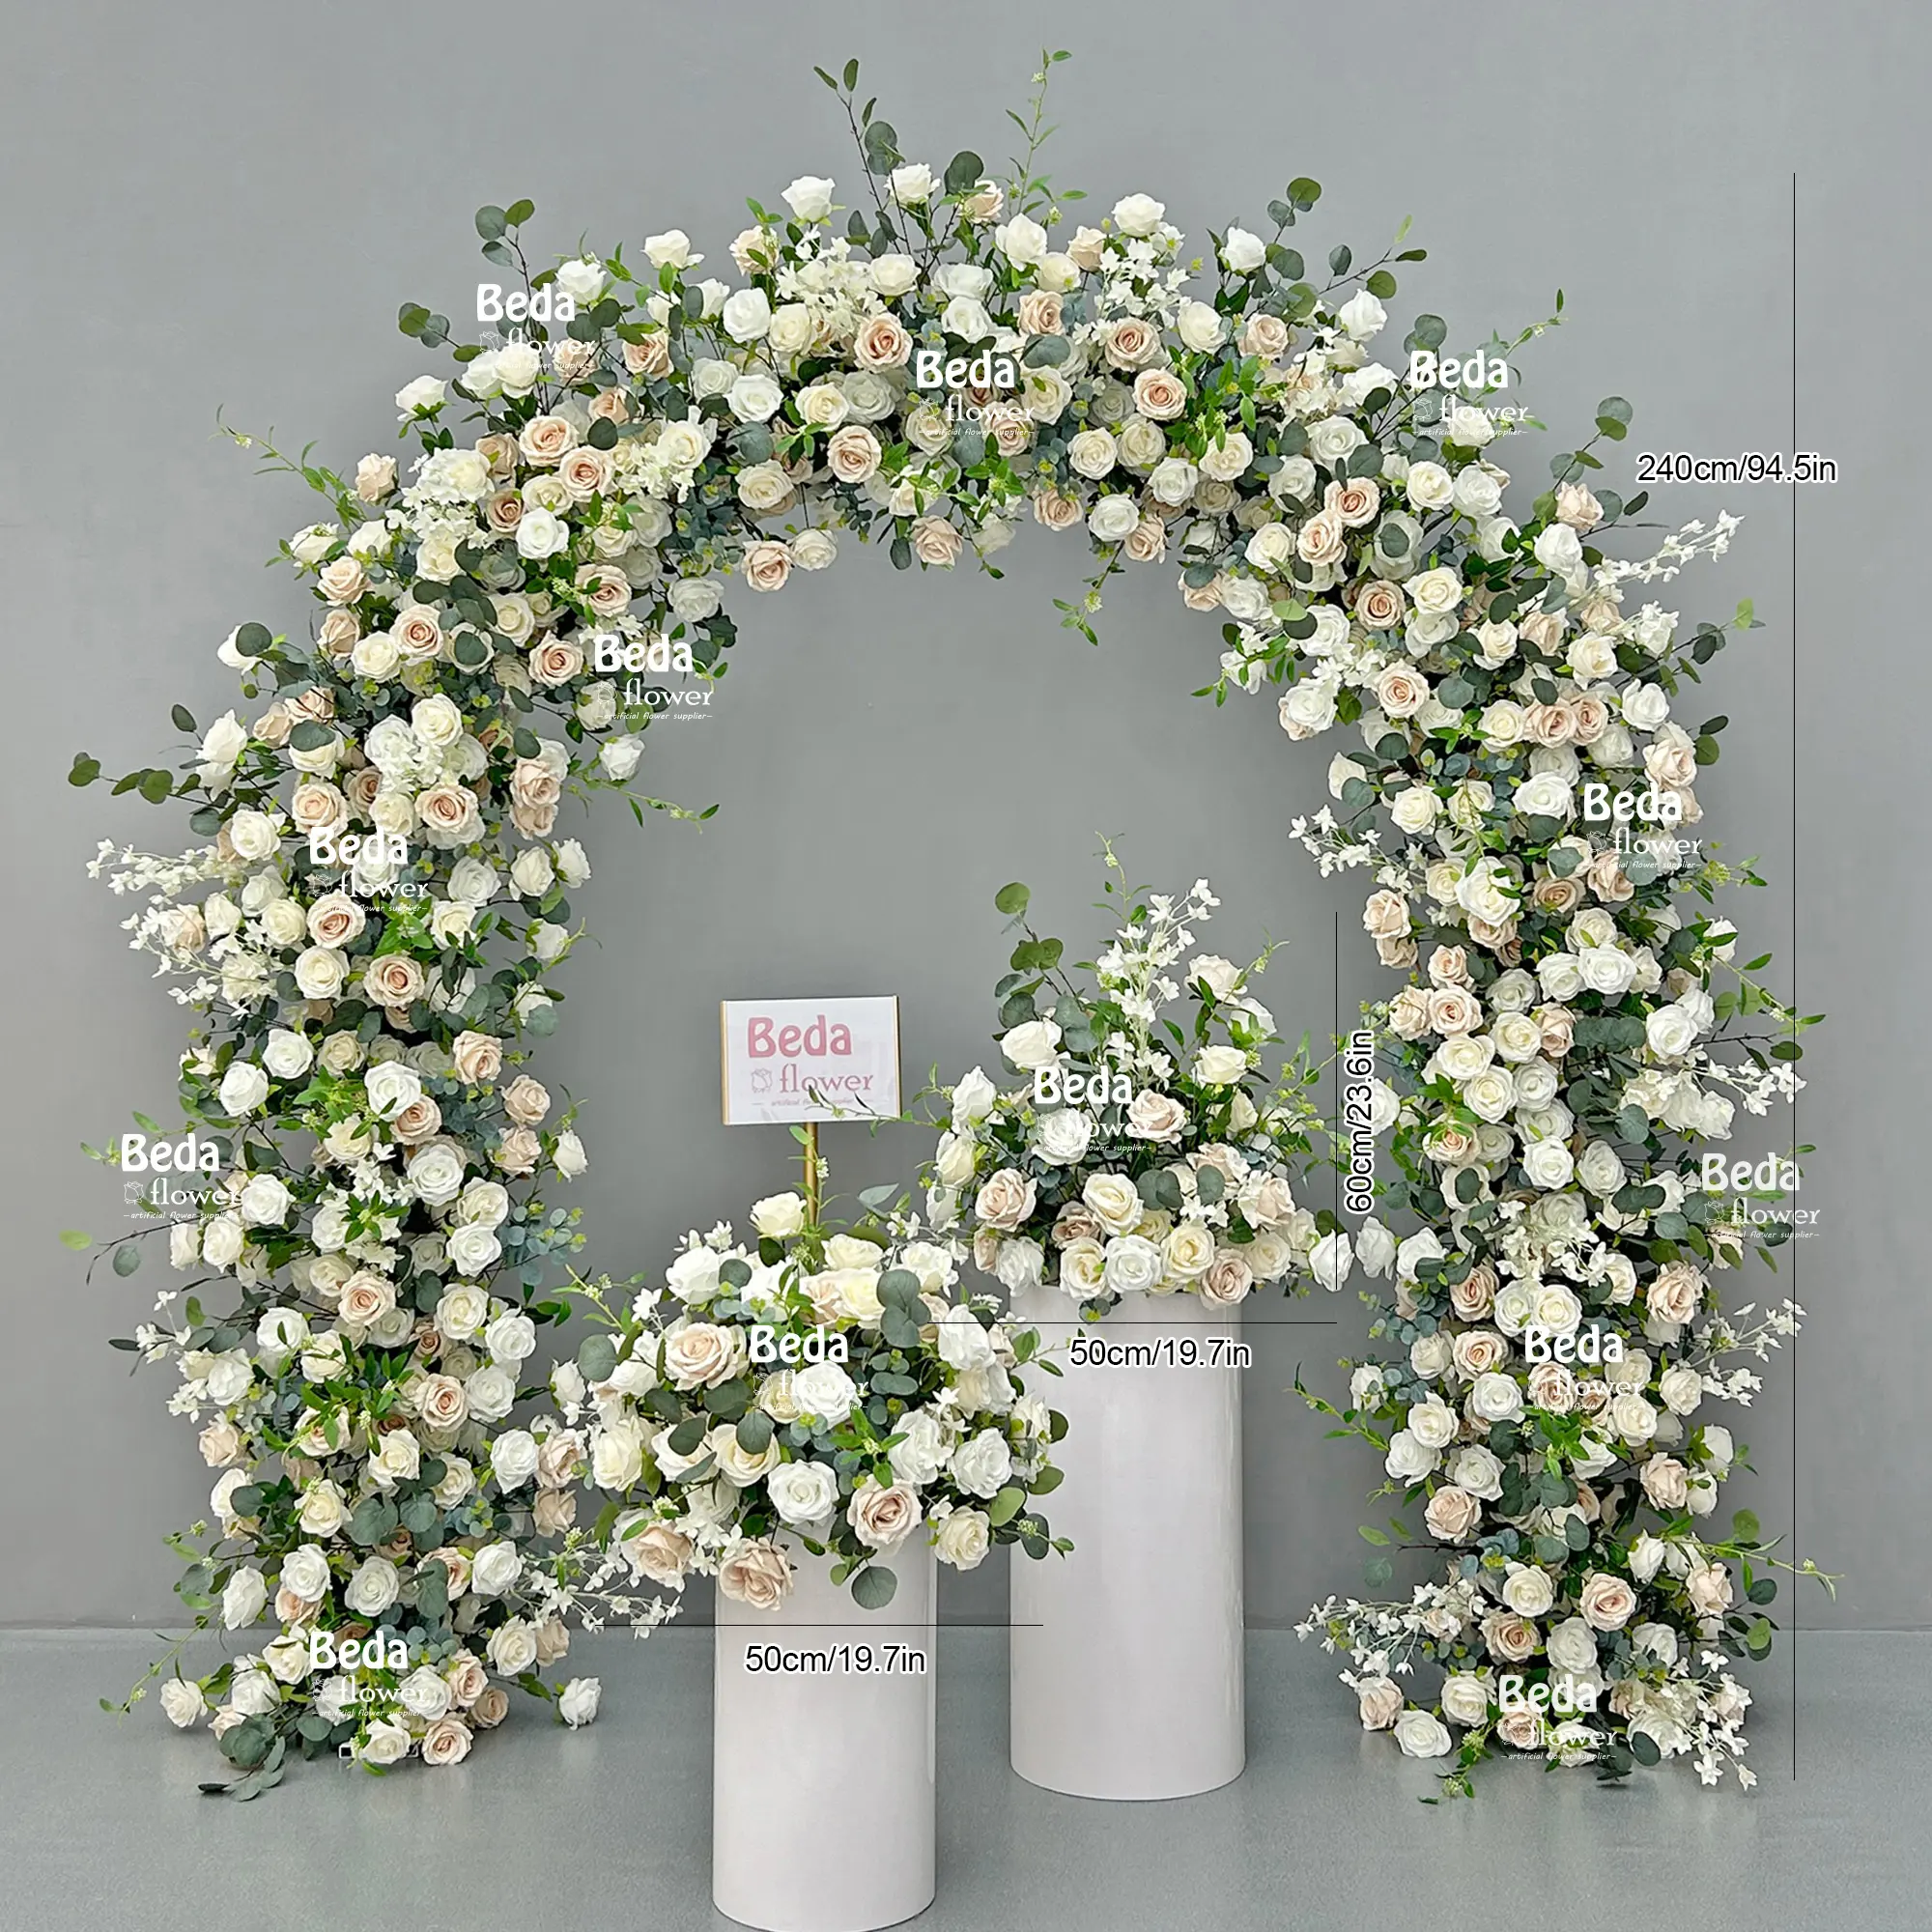 Phalaenopsis putih grosir lengkungan rangkaian bunga pernikahan bulan latar belakang lengkungan bunga untuk dekorasi acara pernikahan